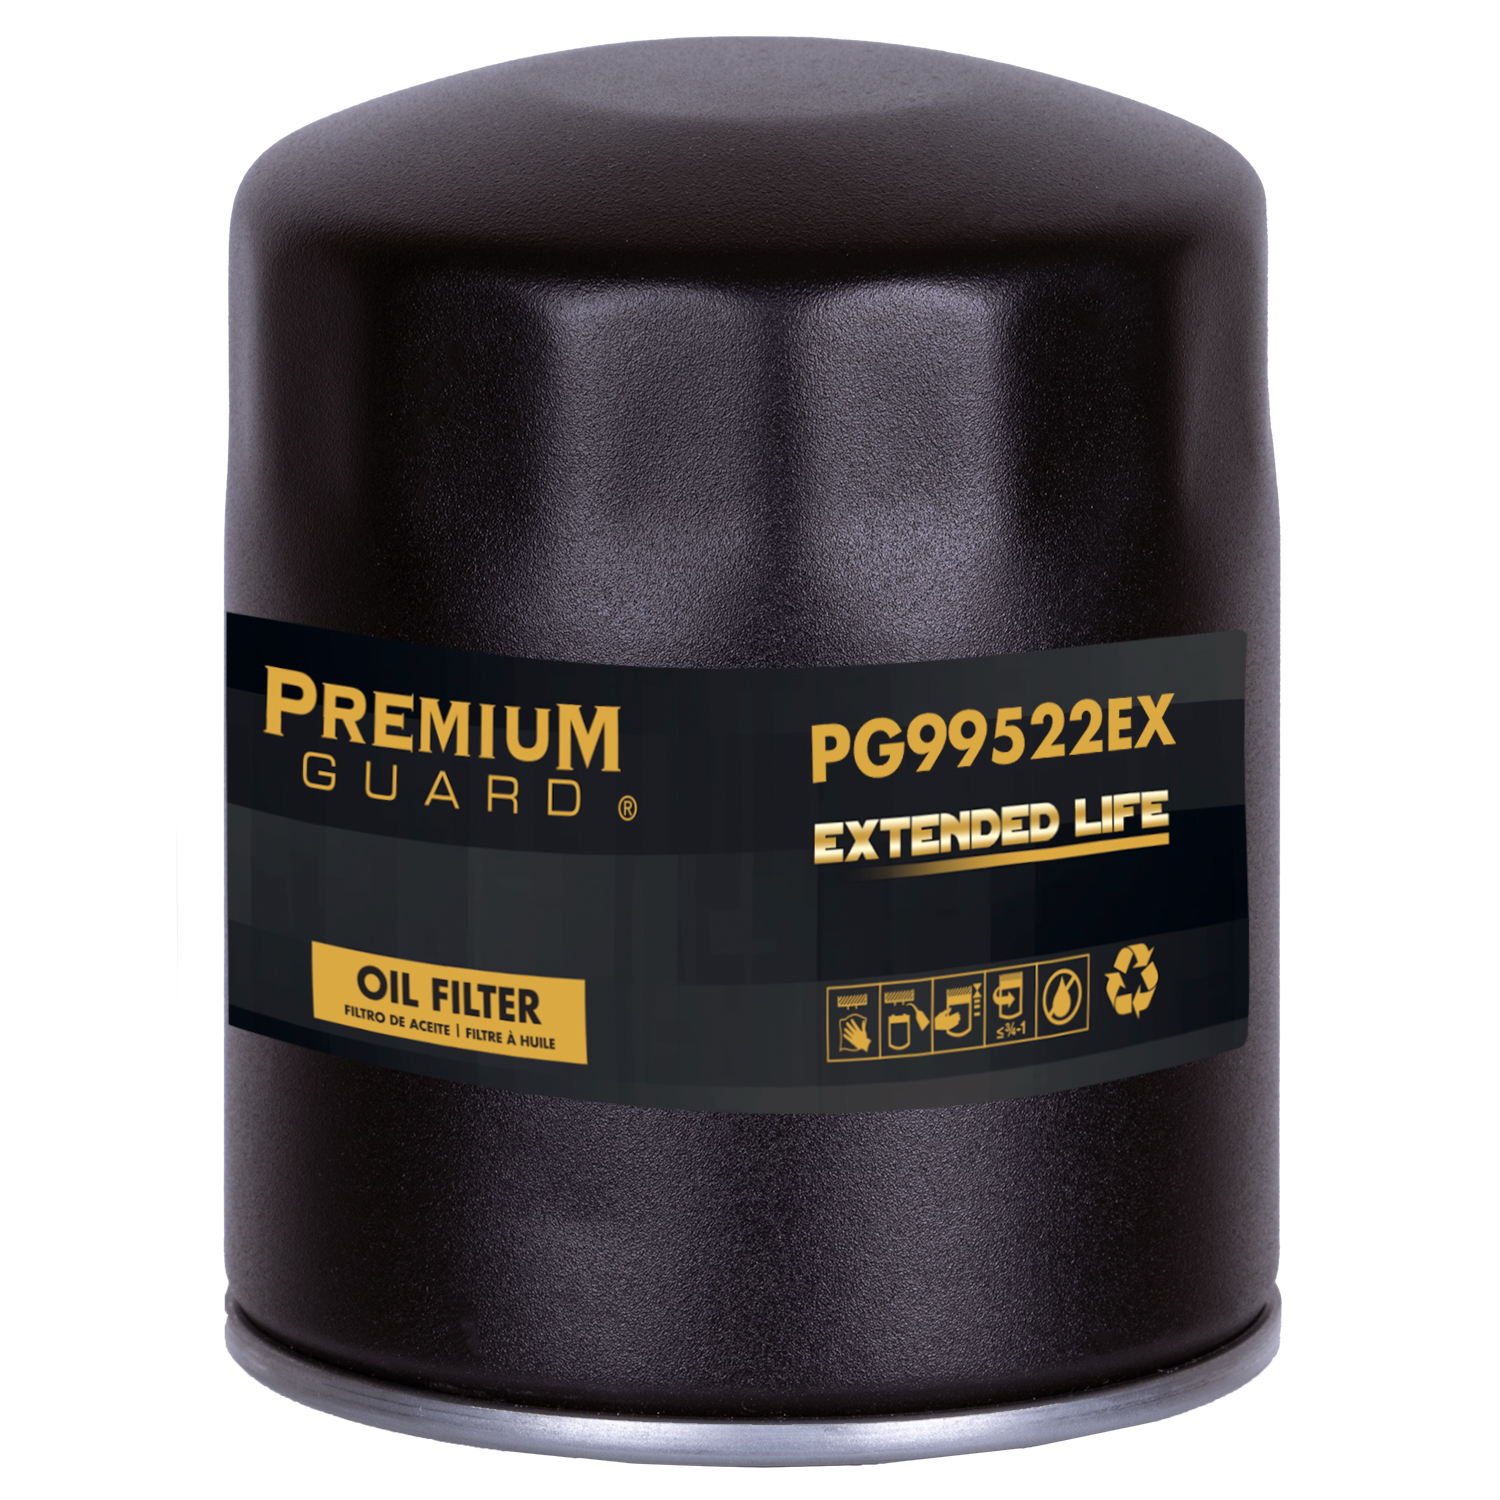 PG99522EX Extended Life Oil Filter up to 10,000 Miles | Fits 2020-22 Chevrolet Silverado 2500 HD, 3500 HD, 4500 HD, 5500 HD, 6500 HD, 2020-22 GMC Sierra 2500 HD, 3500 HD, 2019-21 International CV515 - image 2 of 5